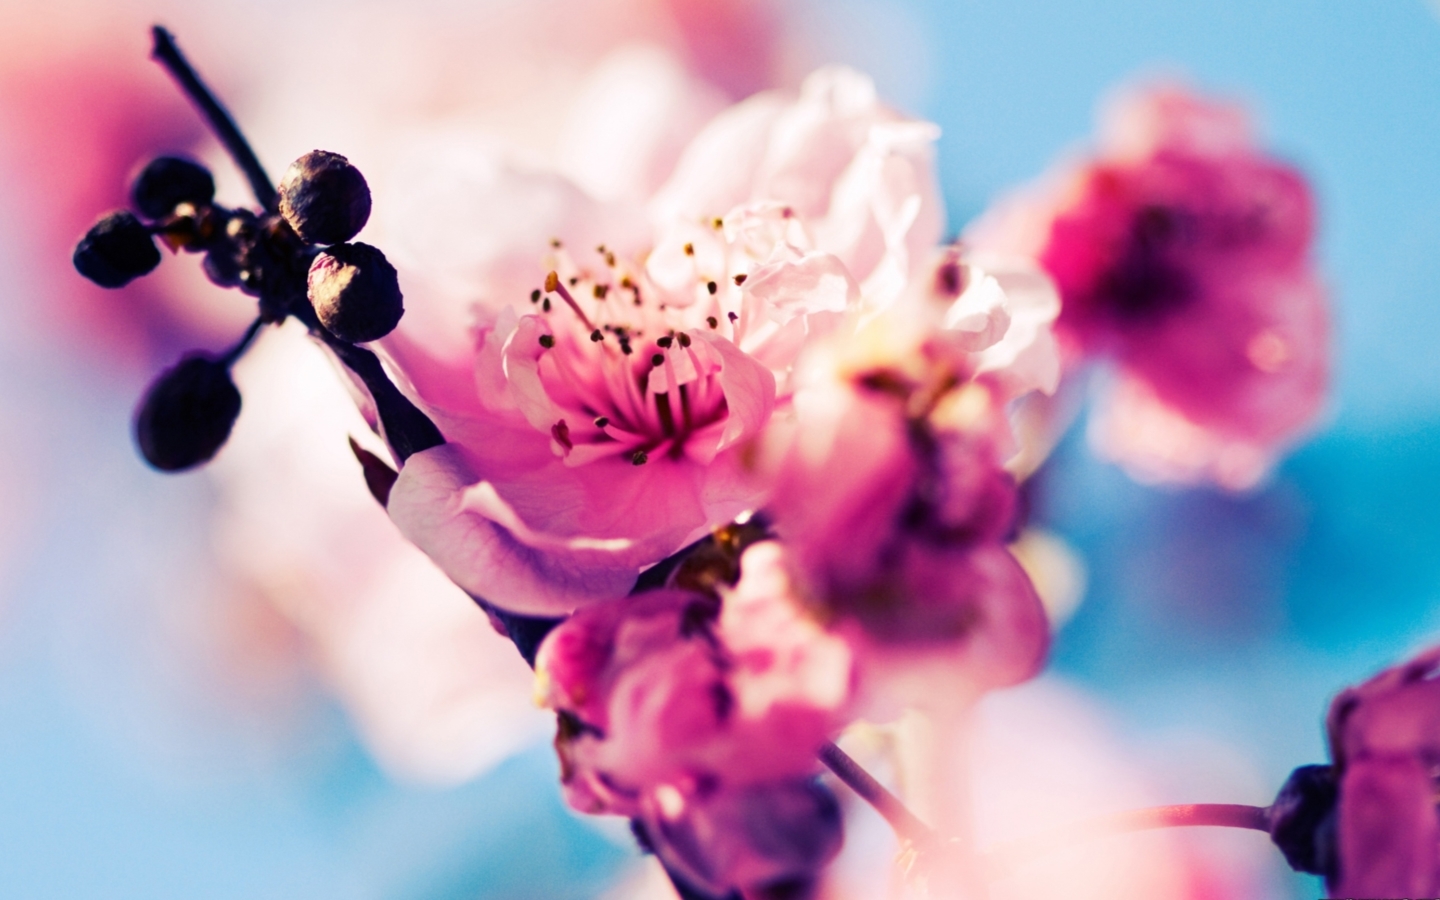 Beautiful Cherry Blossoms MacBook Pro Wallpaper HD | HD Wallpapers ...